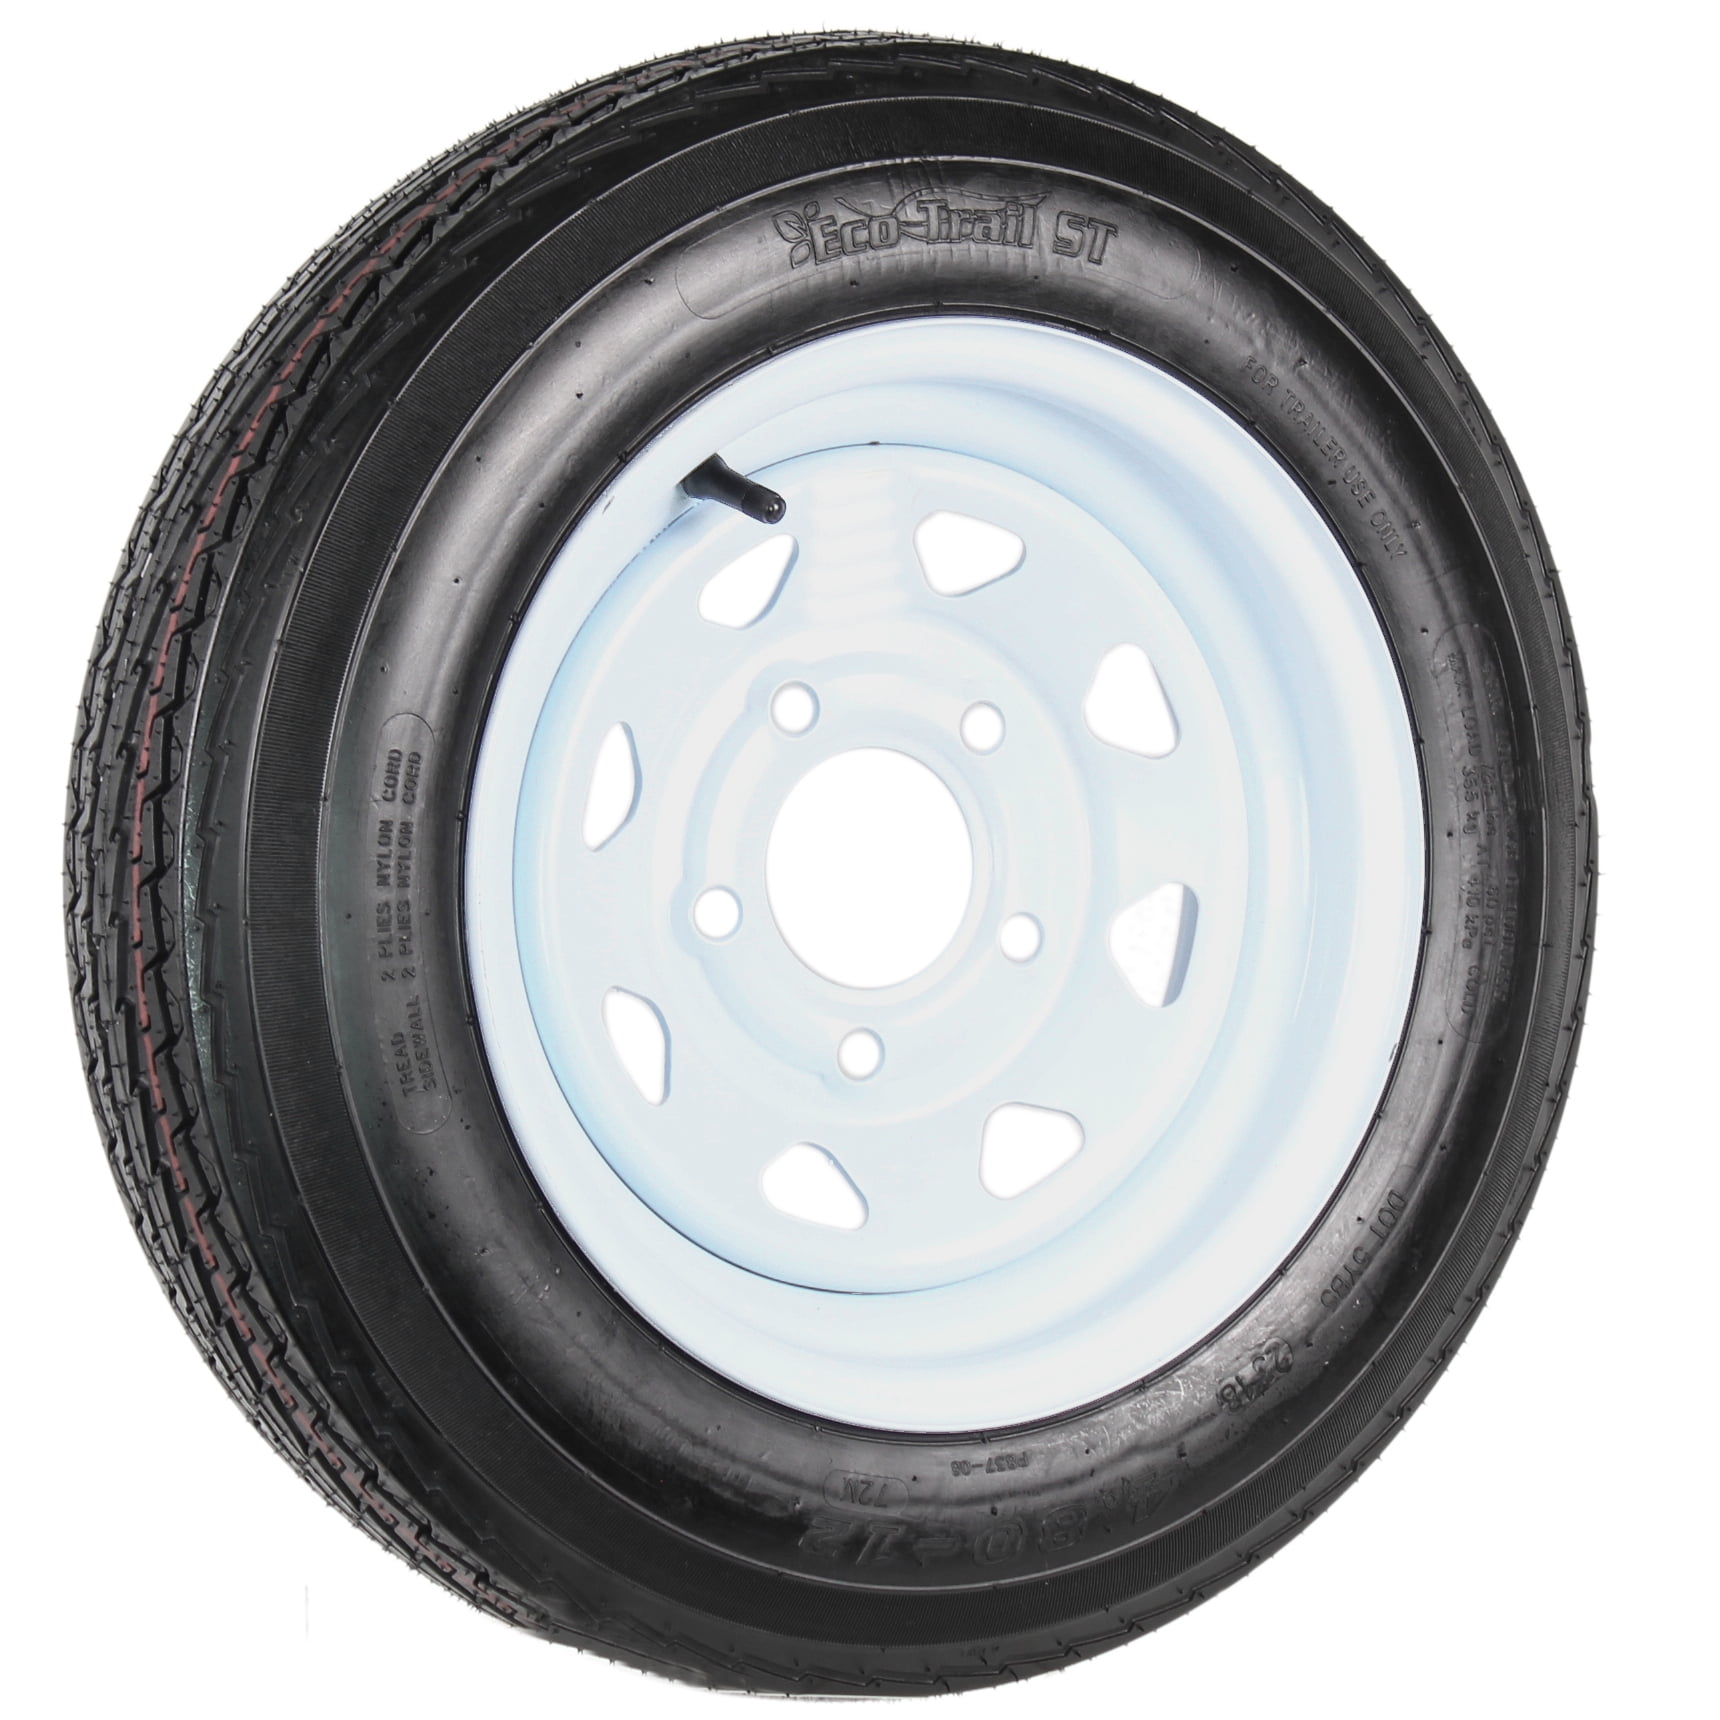 2pcs 4.8-12 5lug LRC P811 Tubeless Trailer Tires & Rims 4.8-12-6PR 5LUG Wheel White Spoke 